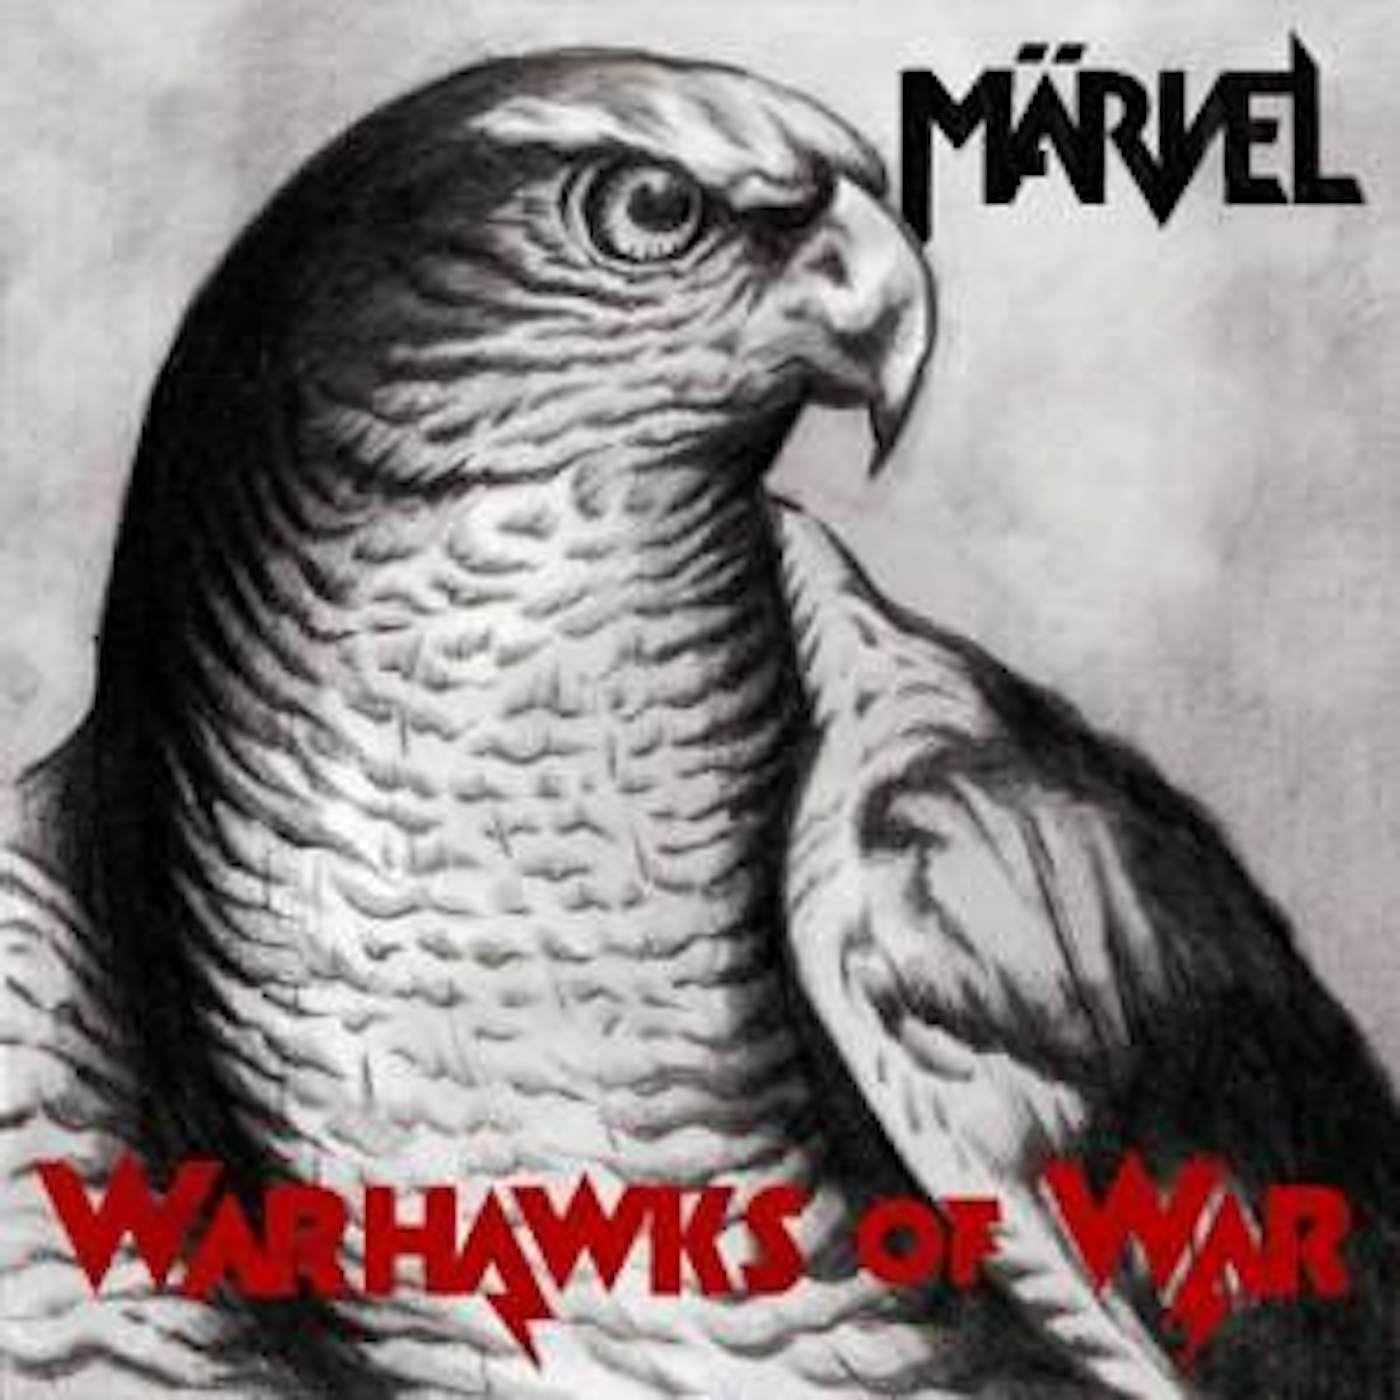 Marvel WARHAWKS OF WAR CD